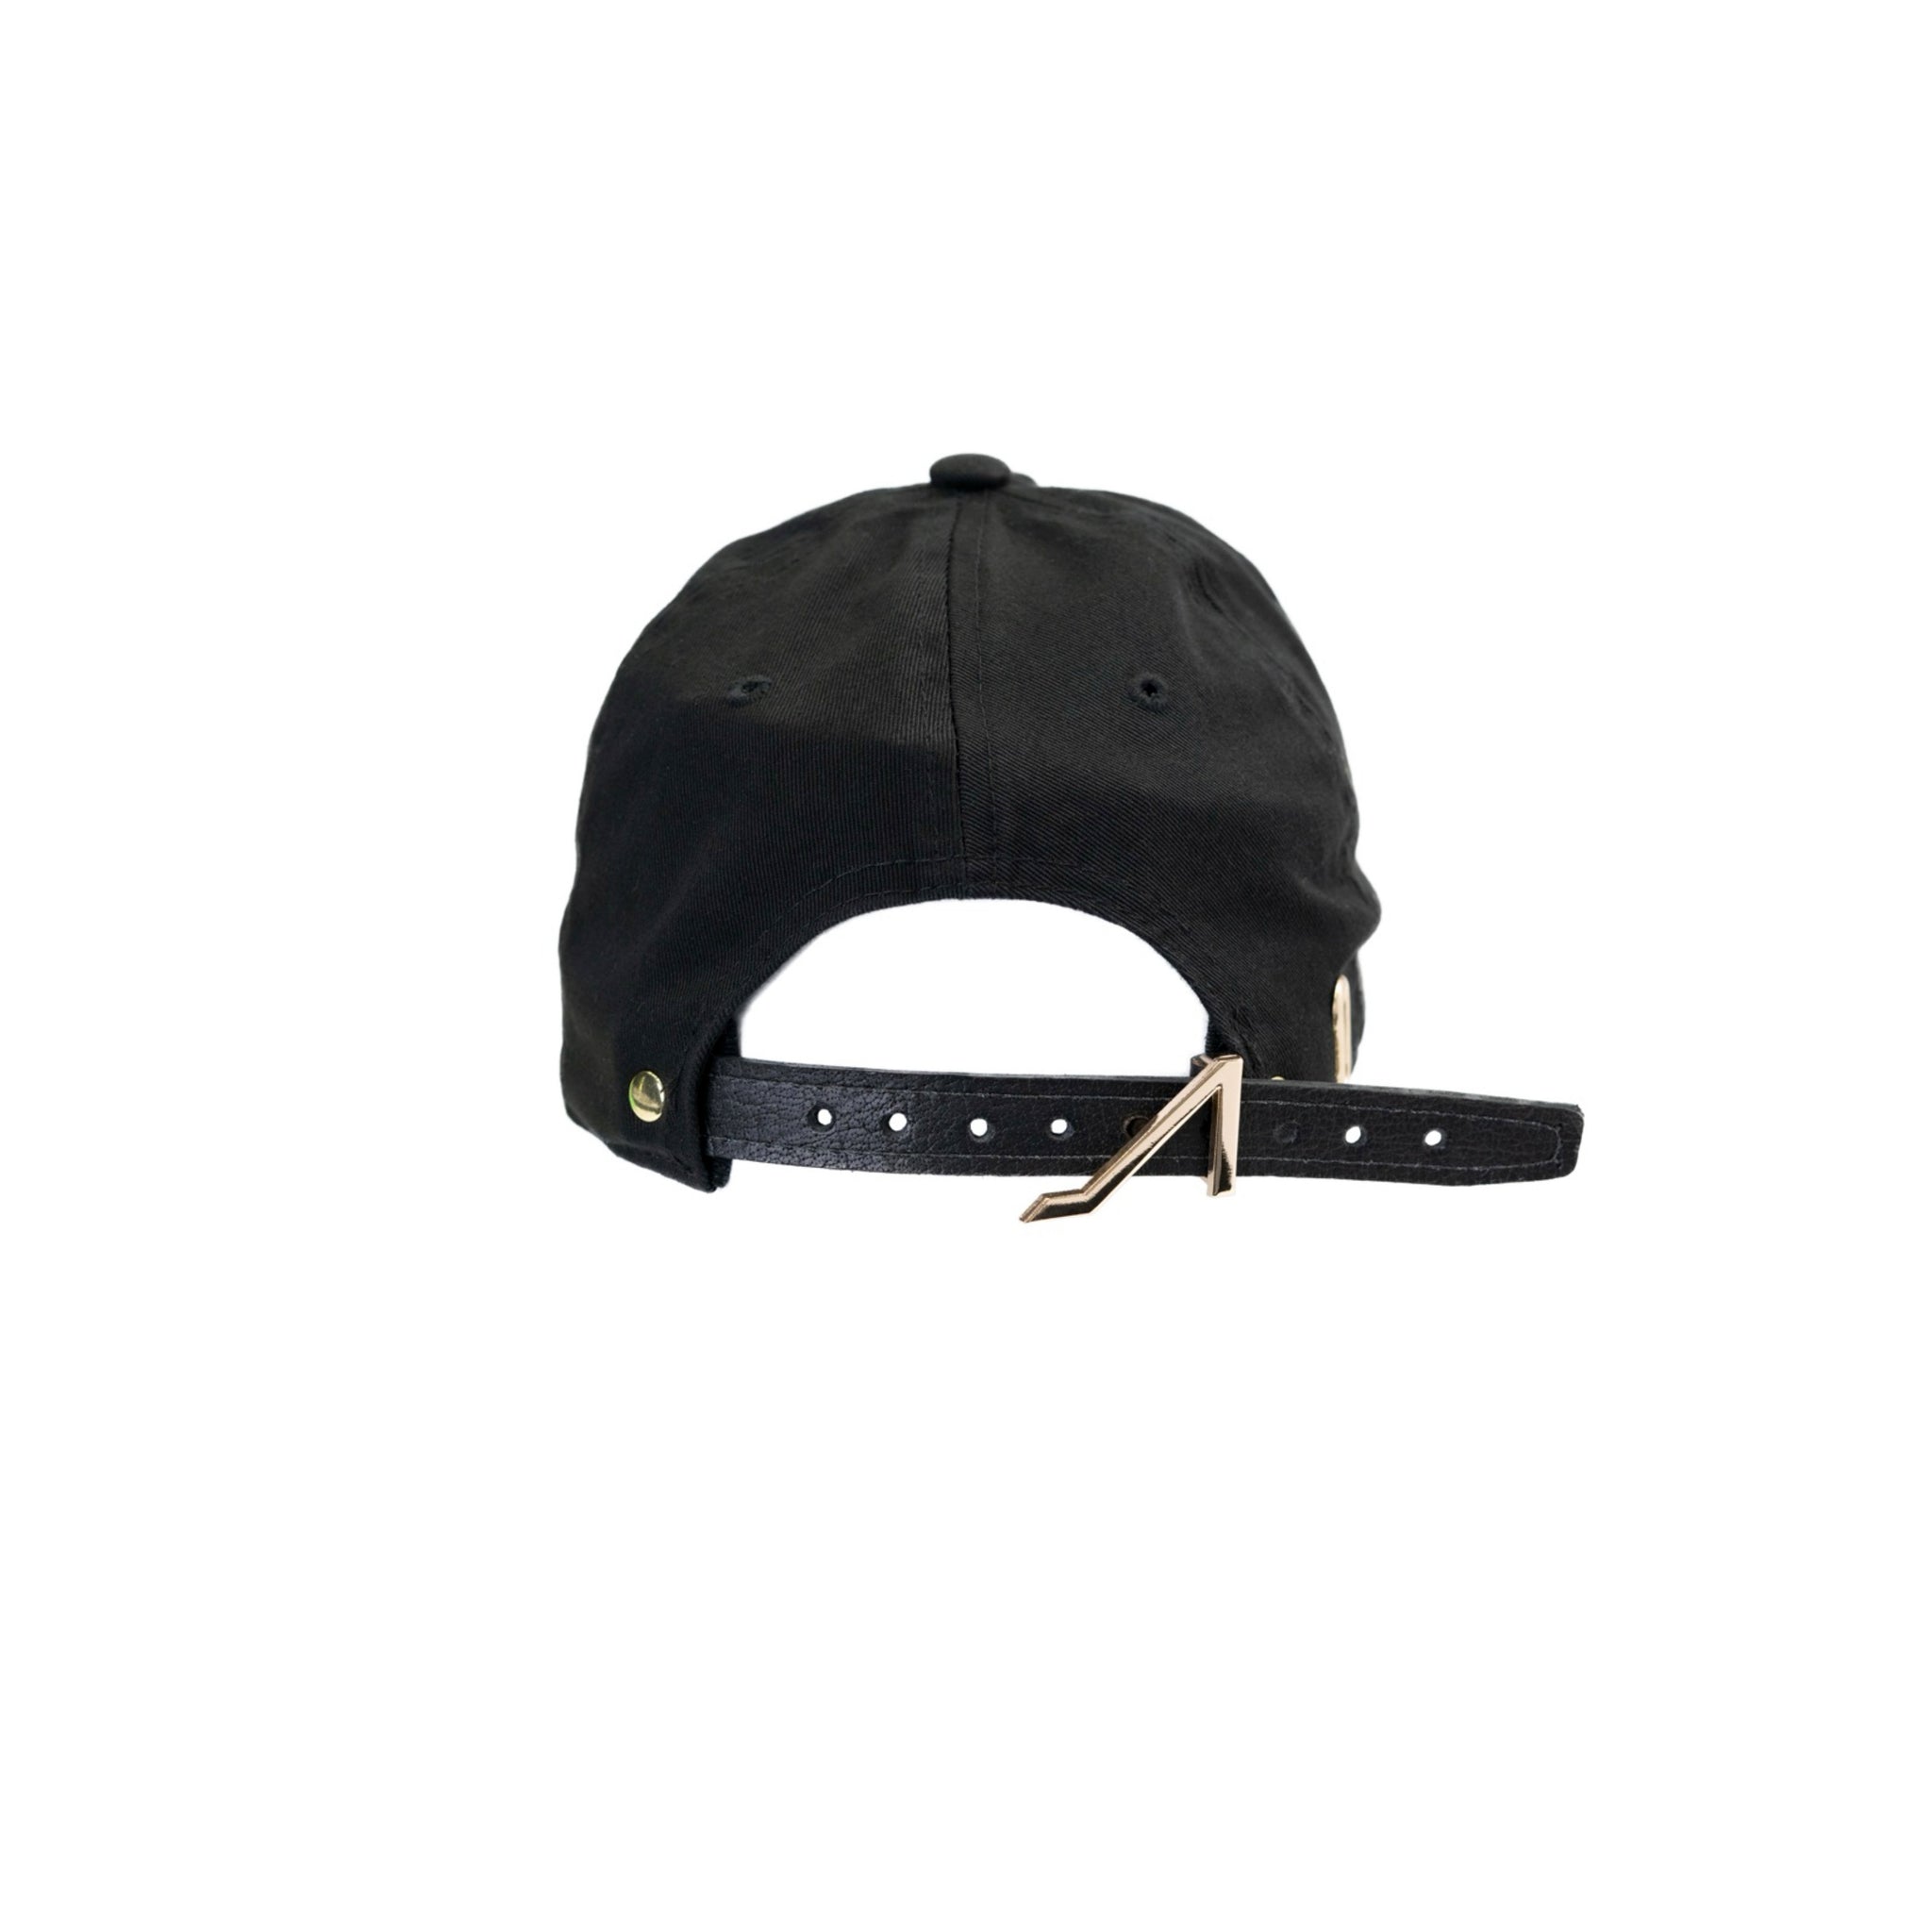 Black ultra suede hat with black logo